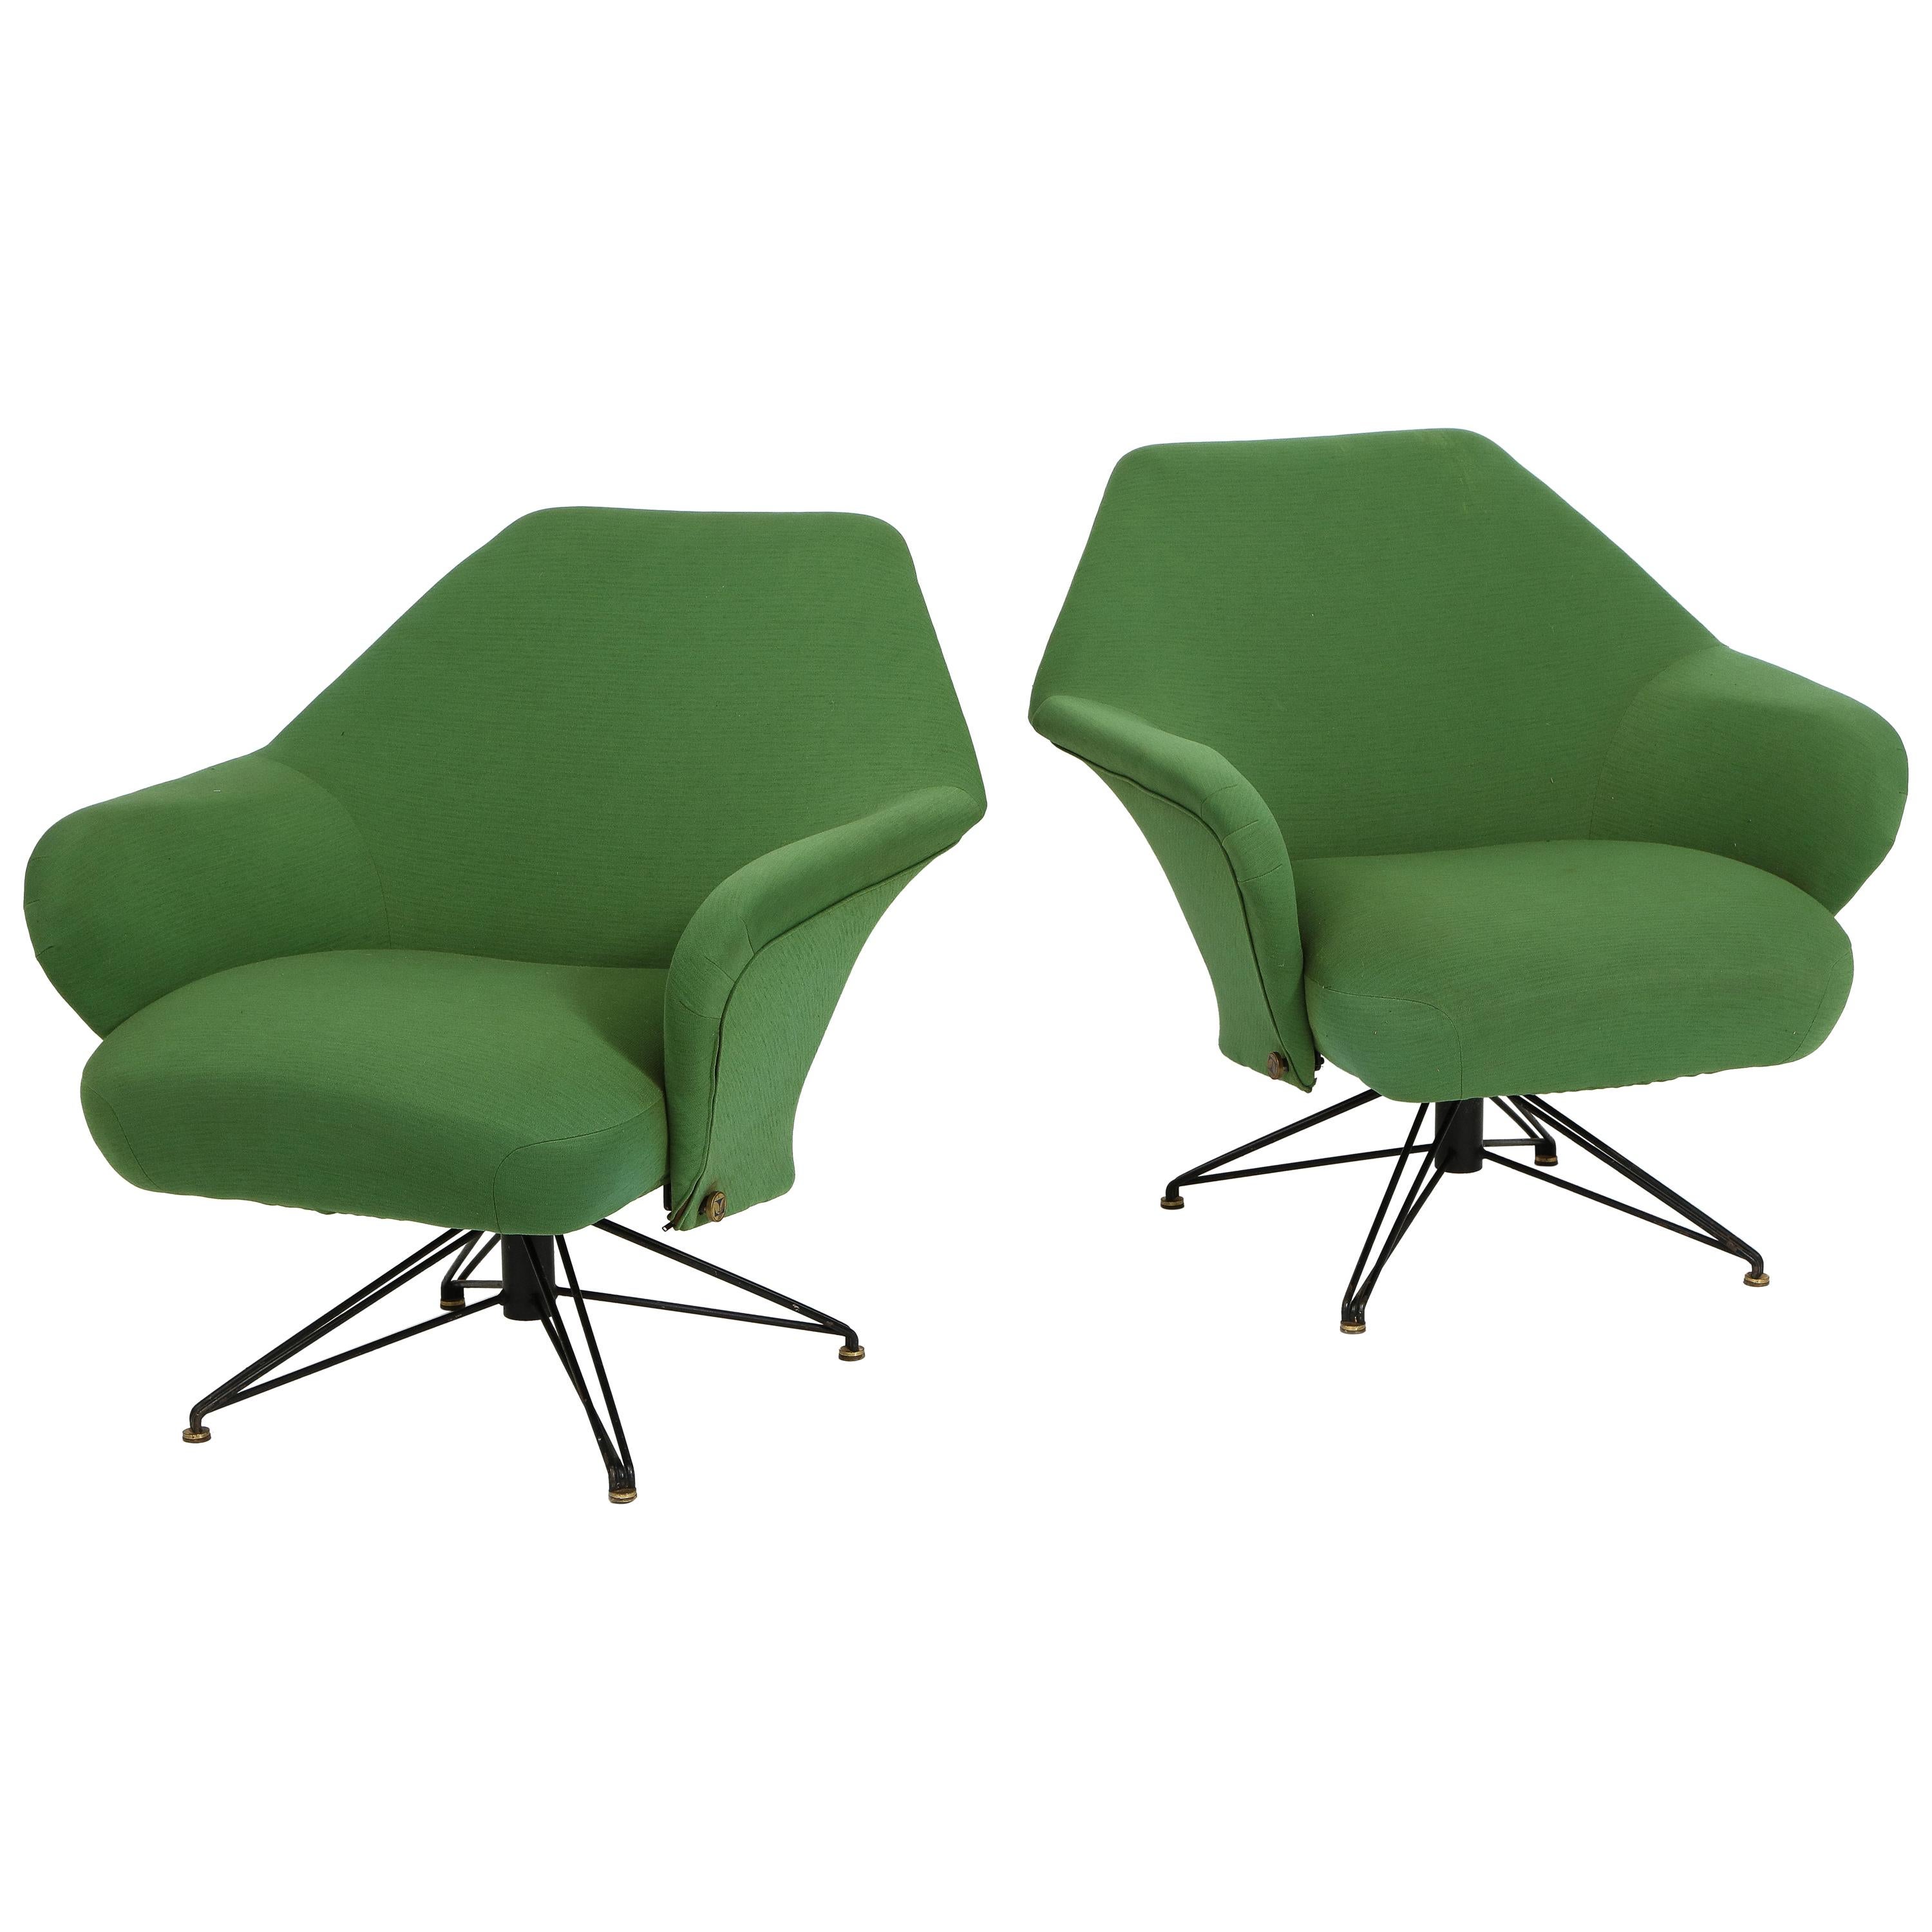 Osvaldo Borsani, Paar grüne P32-Stühle für Tecno, Italien, 1950er Jahre